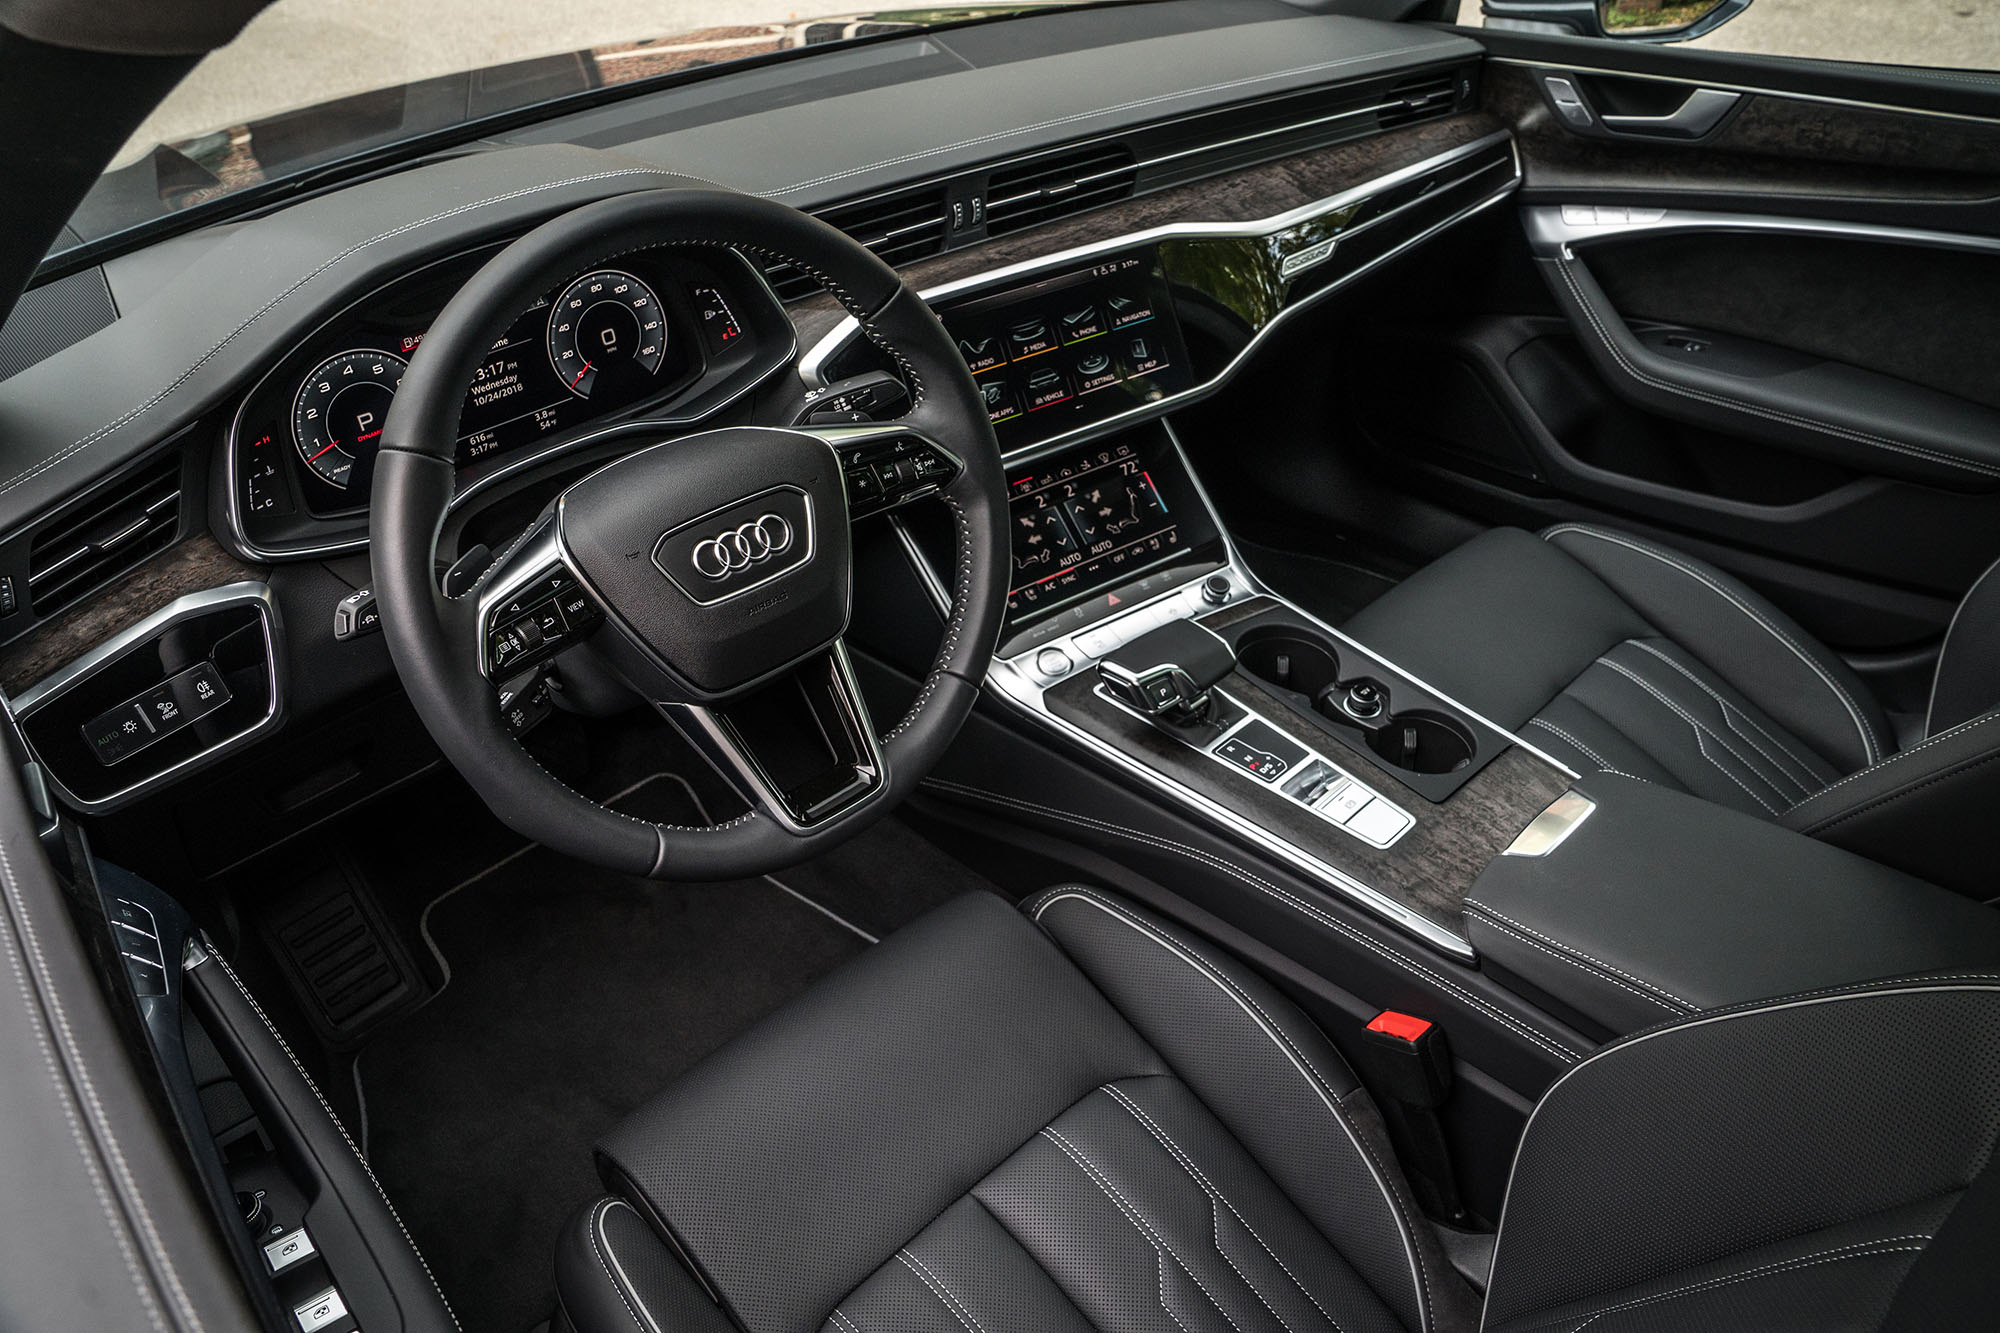 Audi A6 interior.